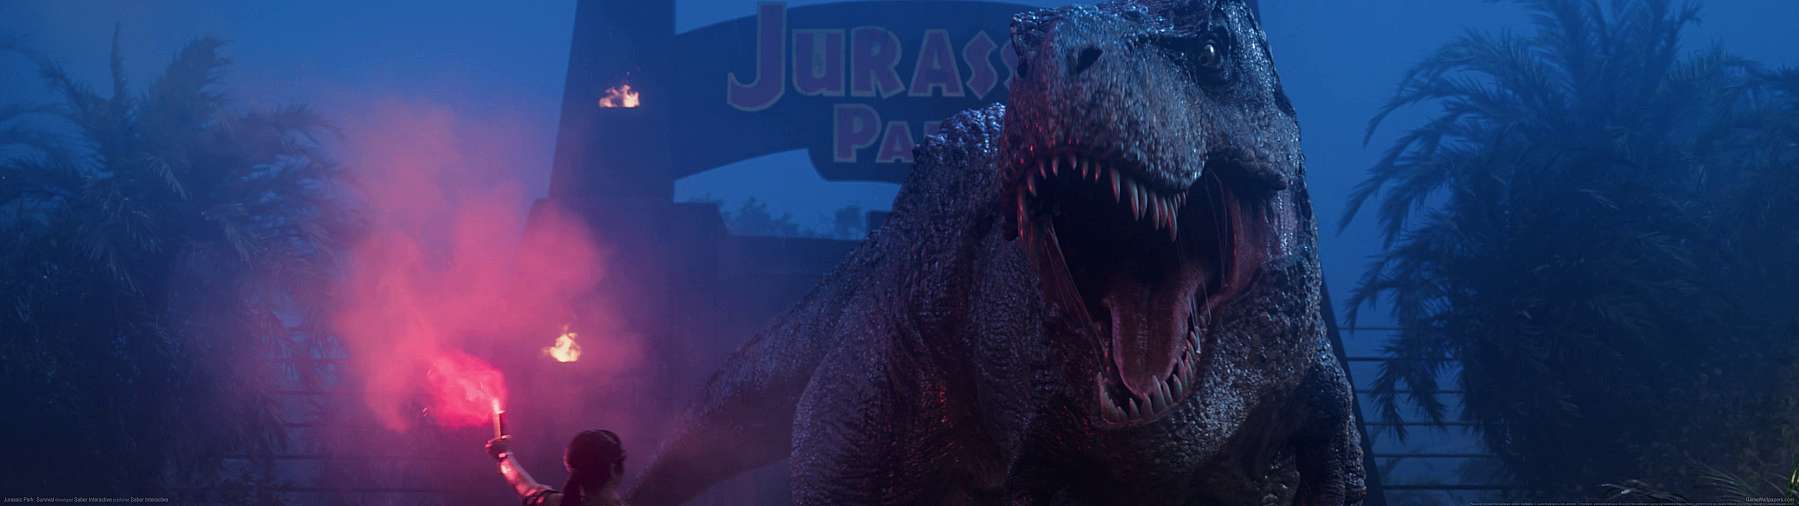 Jurassic Park: Survival superwide wallpaper or background 01